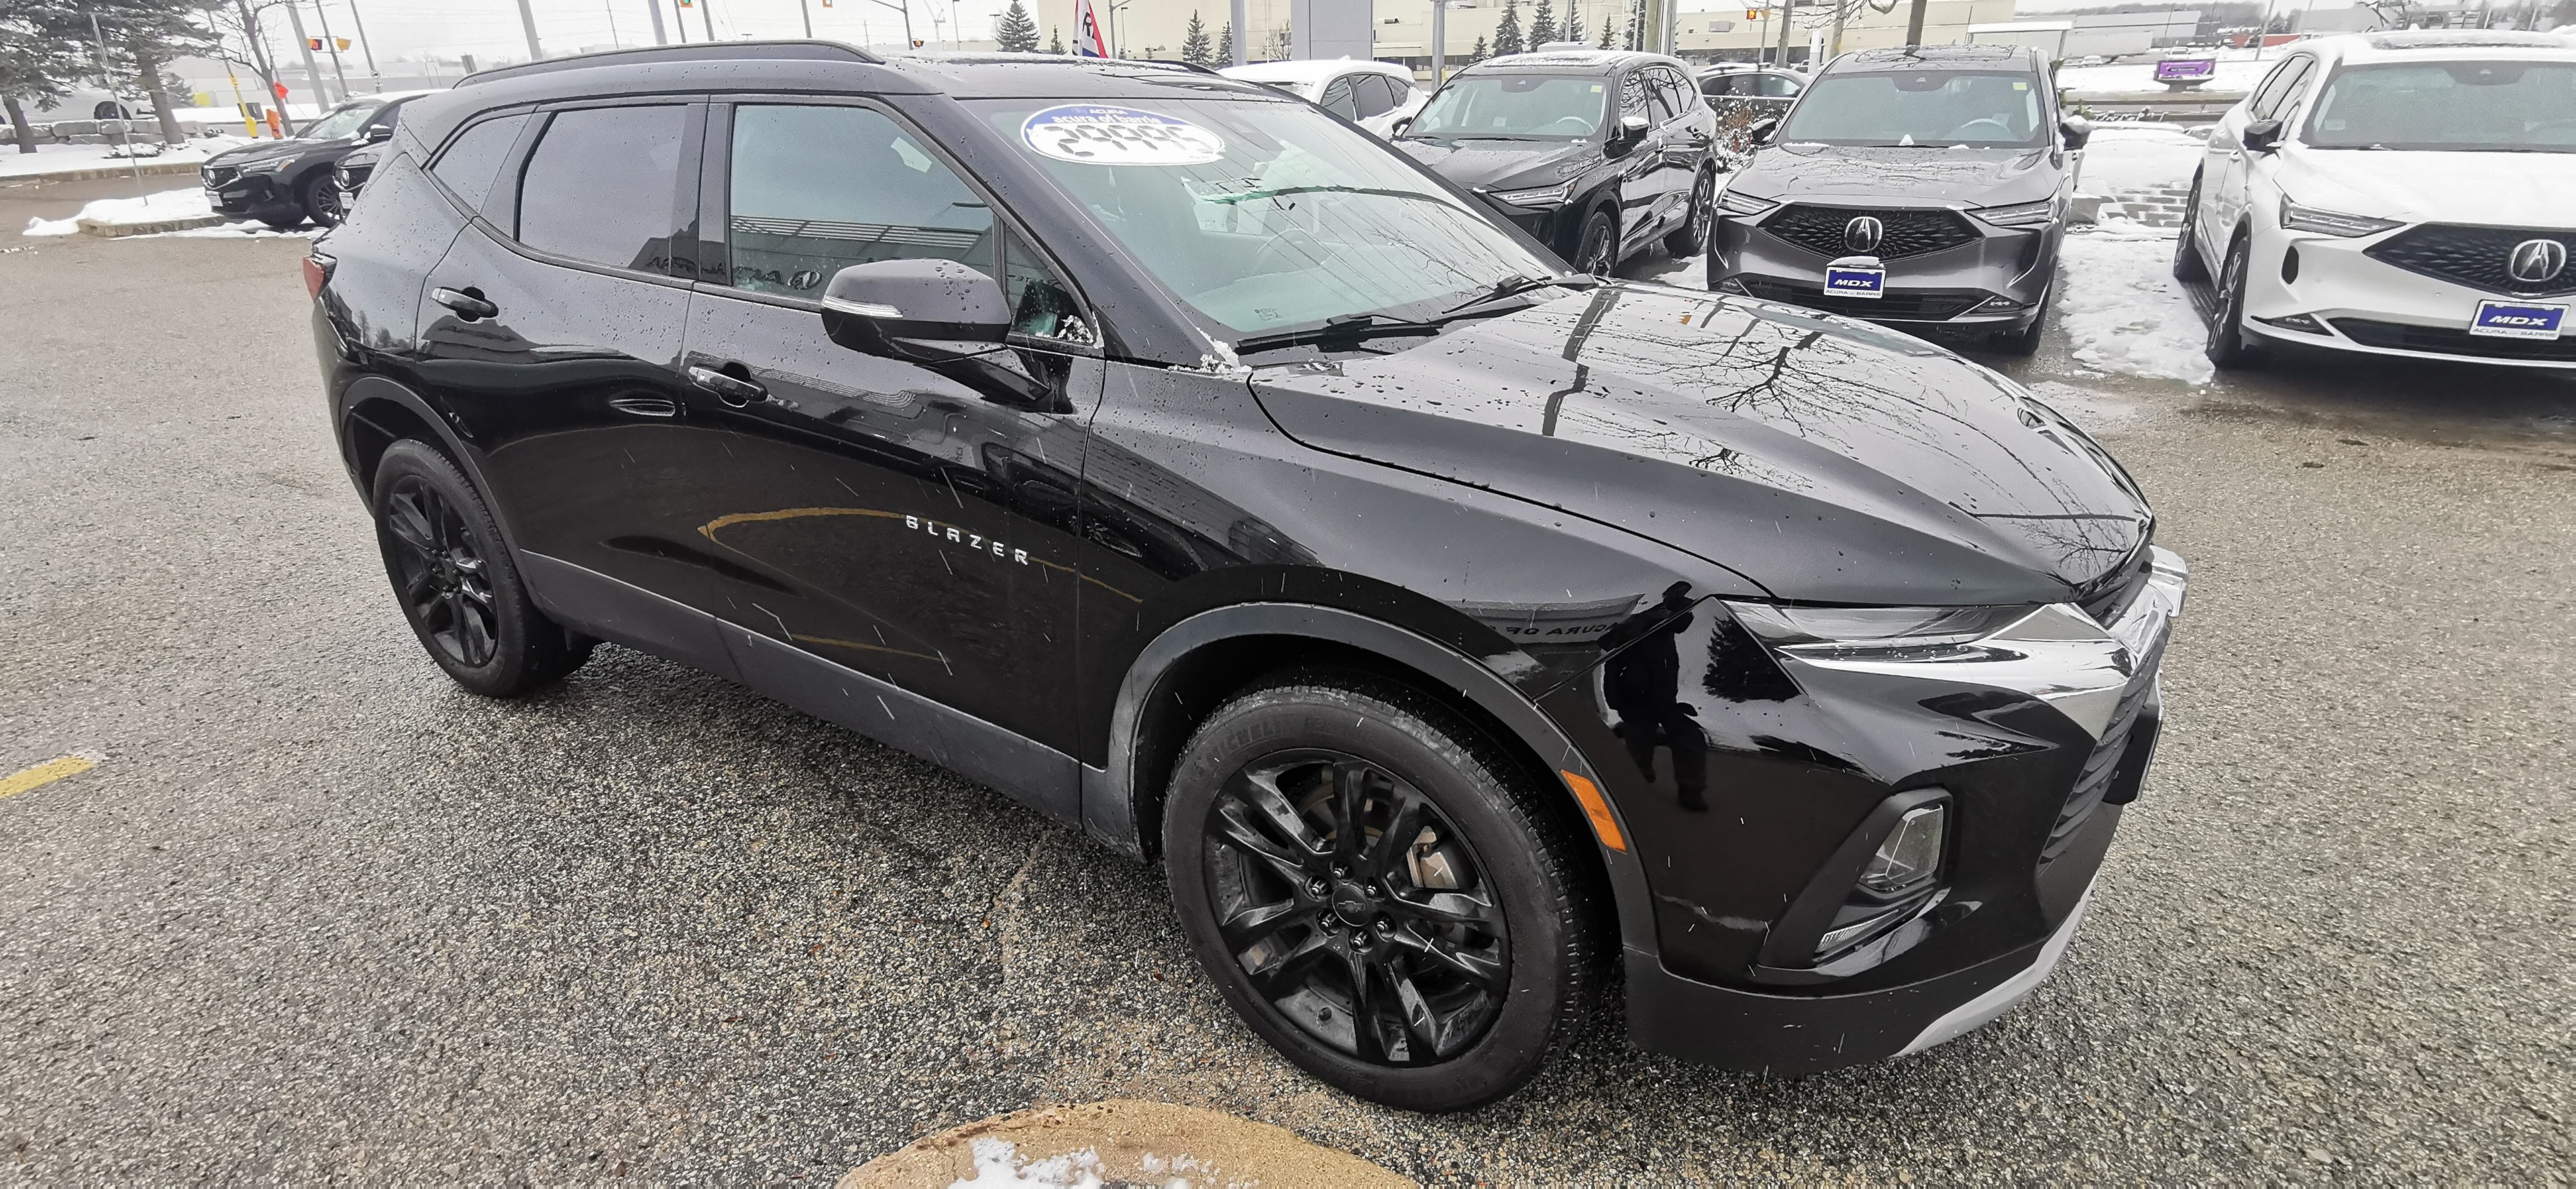 2019 Chevrolet Blazer All Wheel Drive, 4dr 3.6L True North, V6 power!